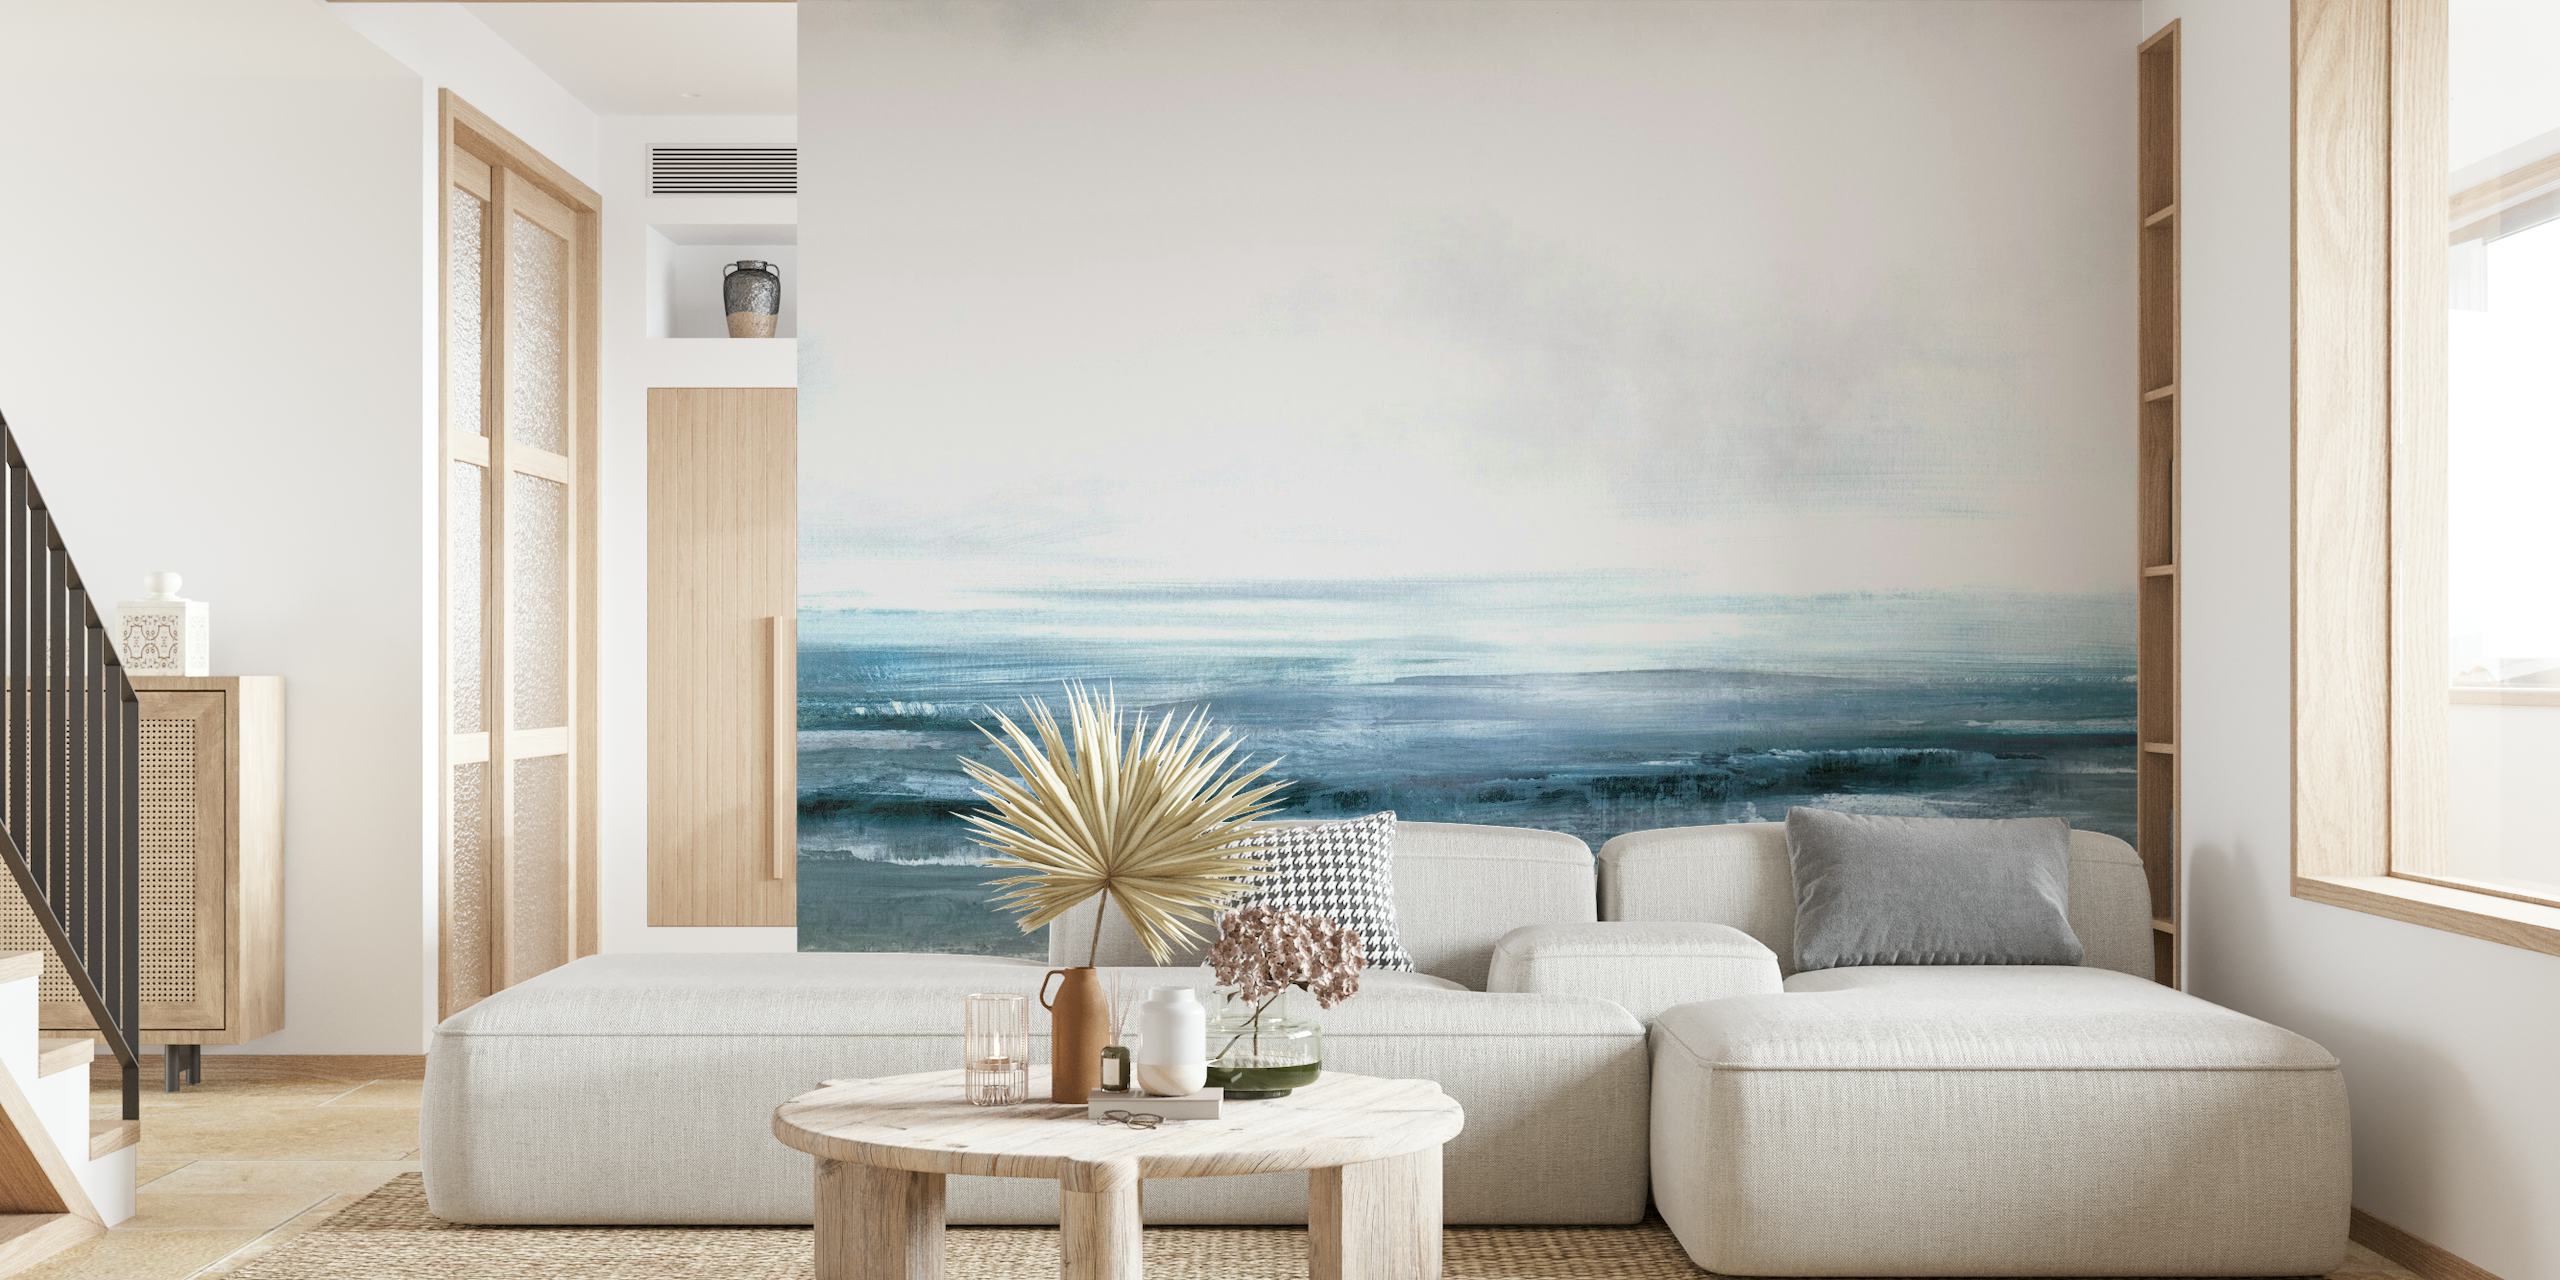 Zidna slika s mirnim horizontom oceana s nijansama plave i sive